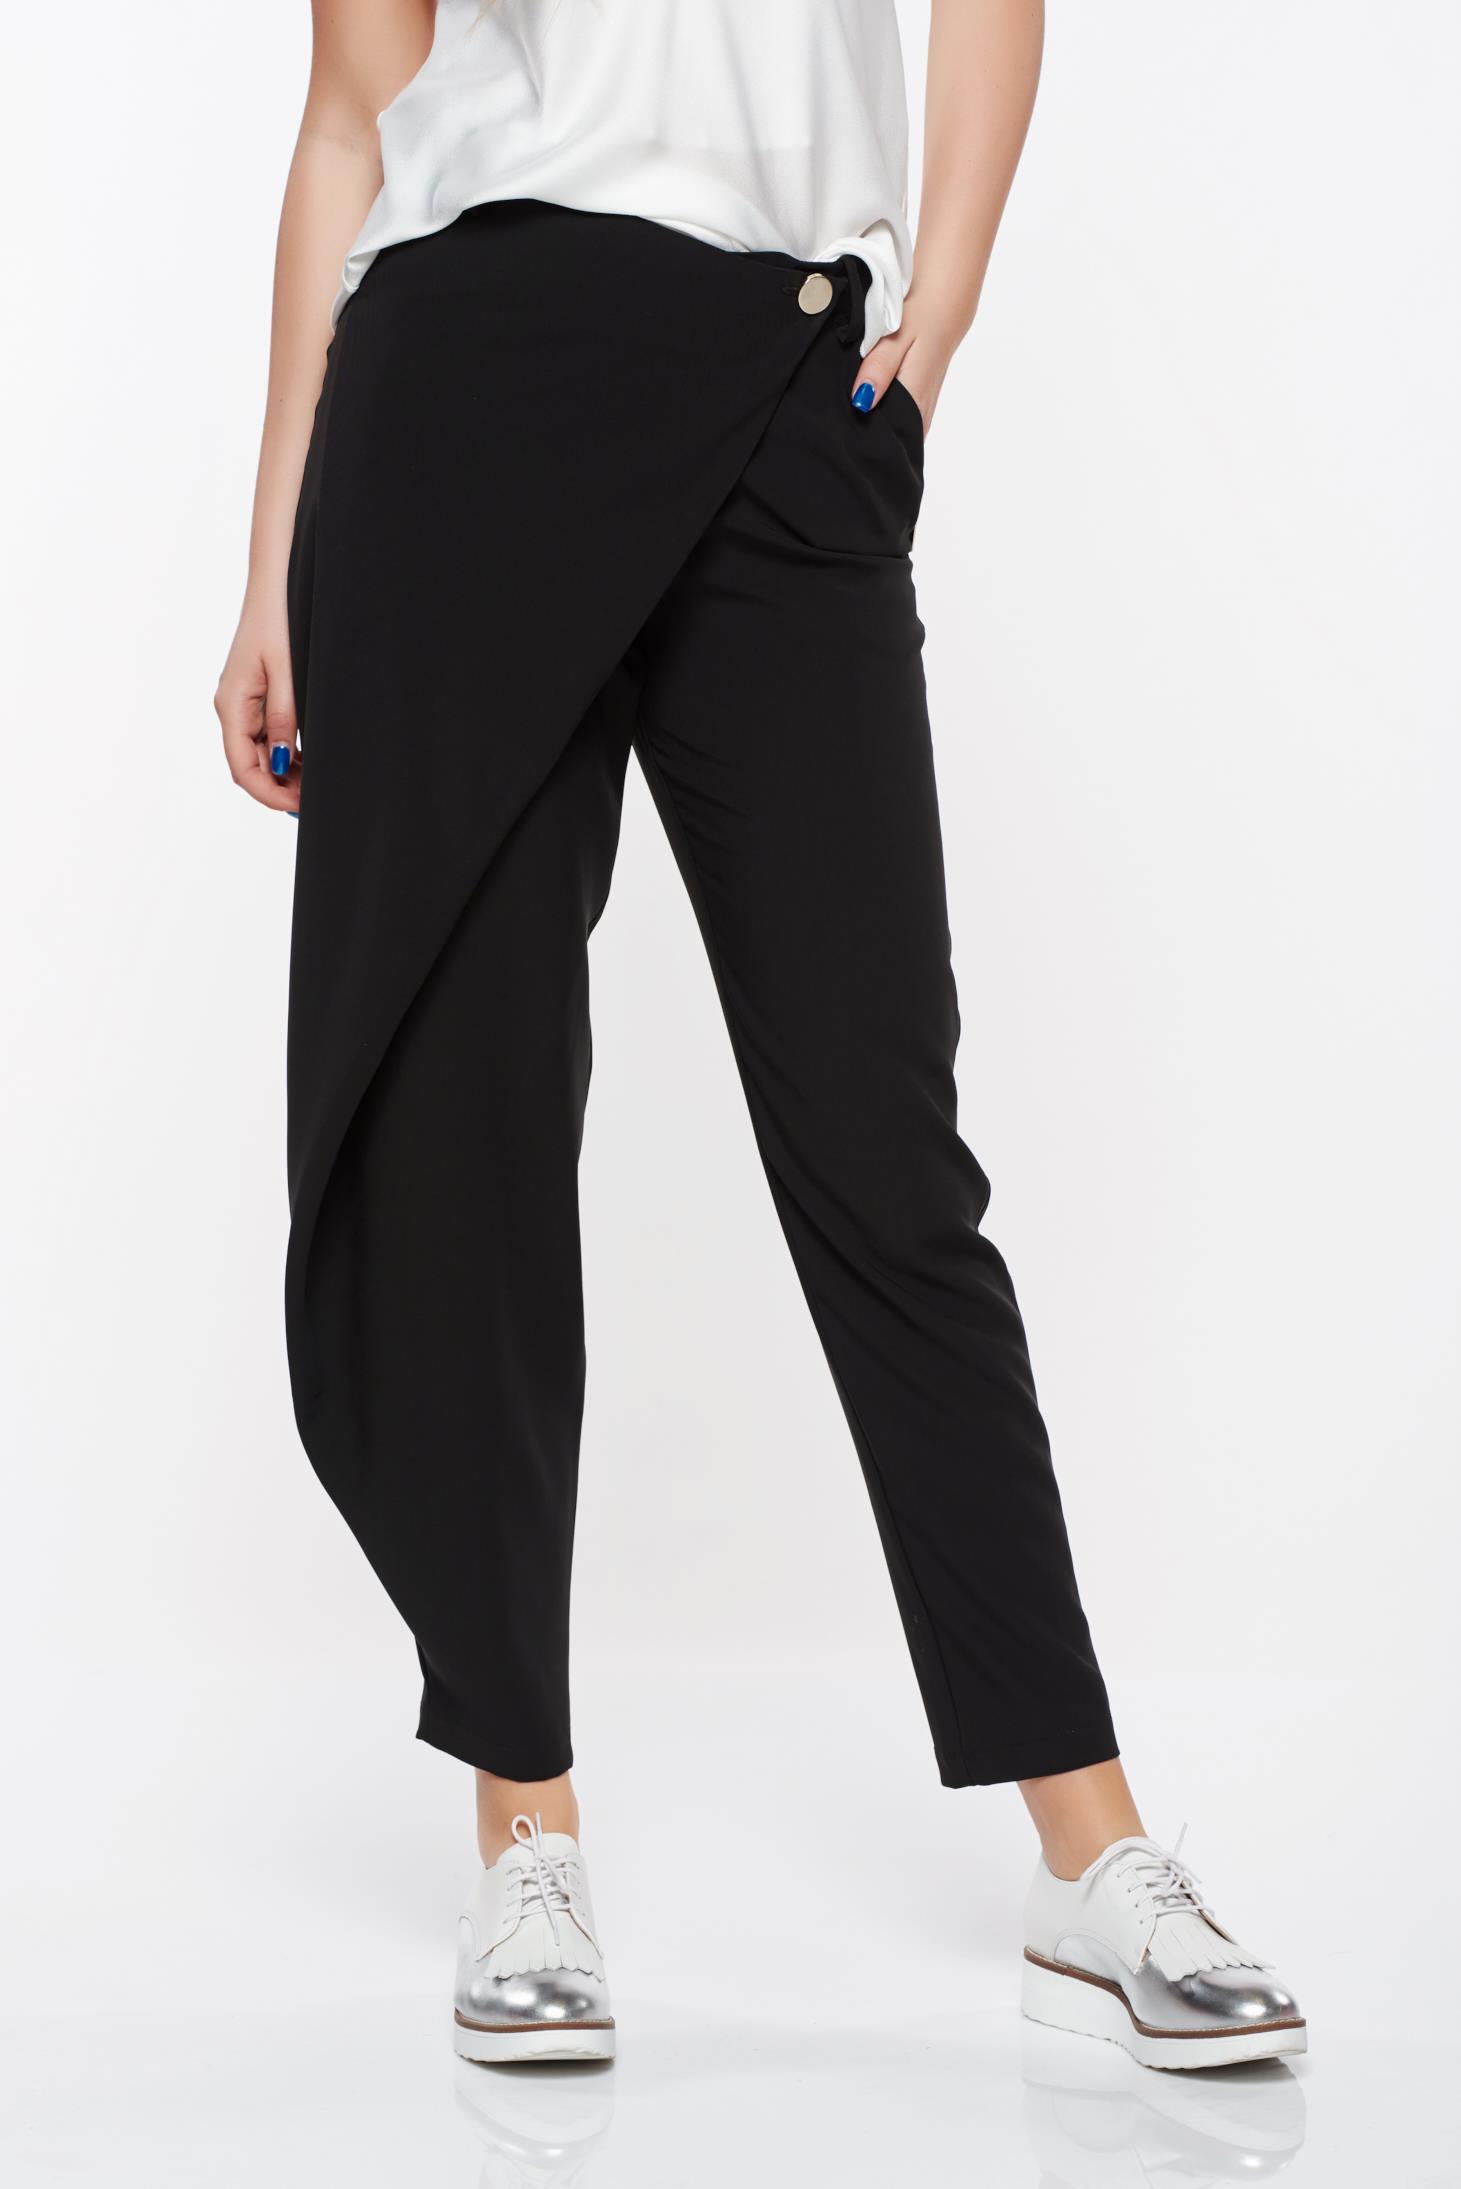 PrettyGirl black elegant trousers with medium waist airy fabric with pockets 1 - StarShinerS.com